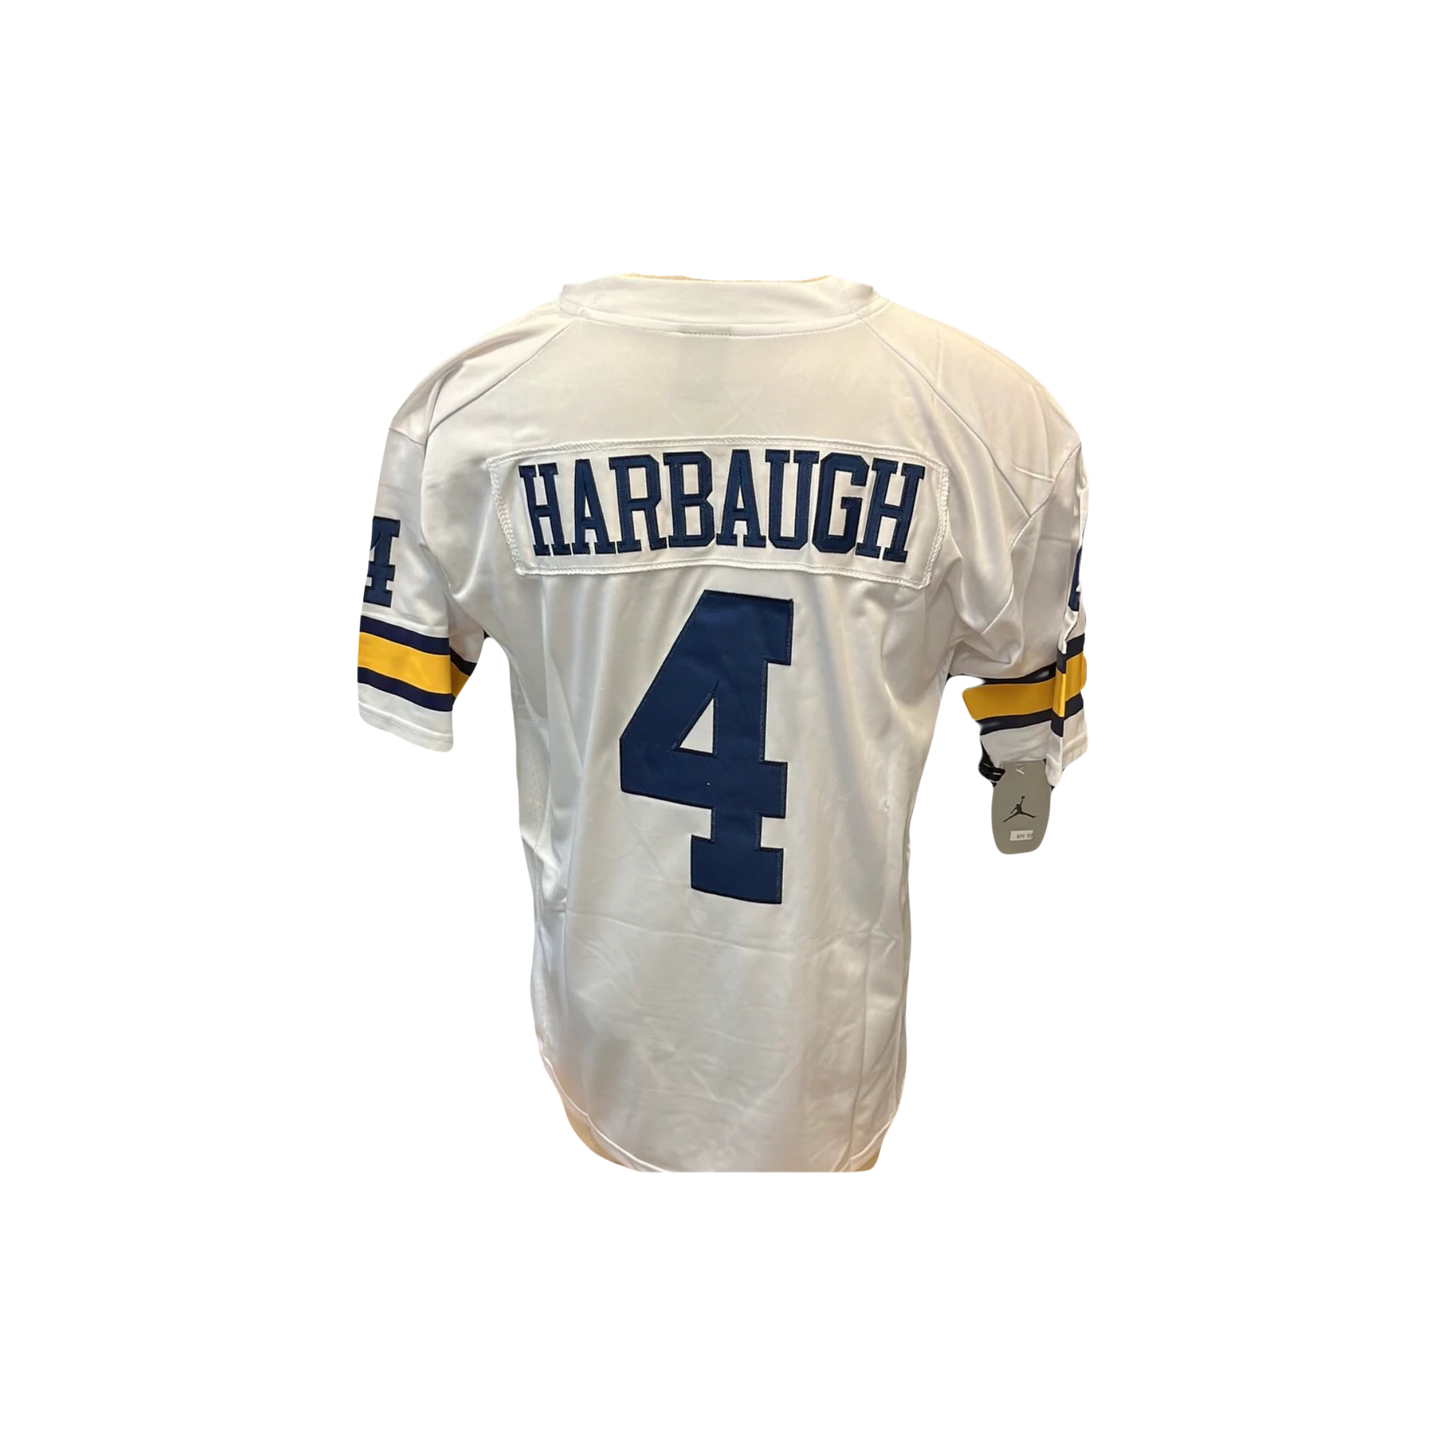 Jim Harbaugh NCAA Michigan Wolverines Campus Legend College Football Away Jersey